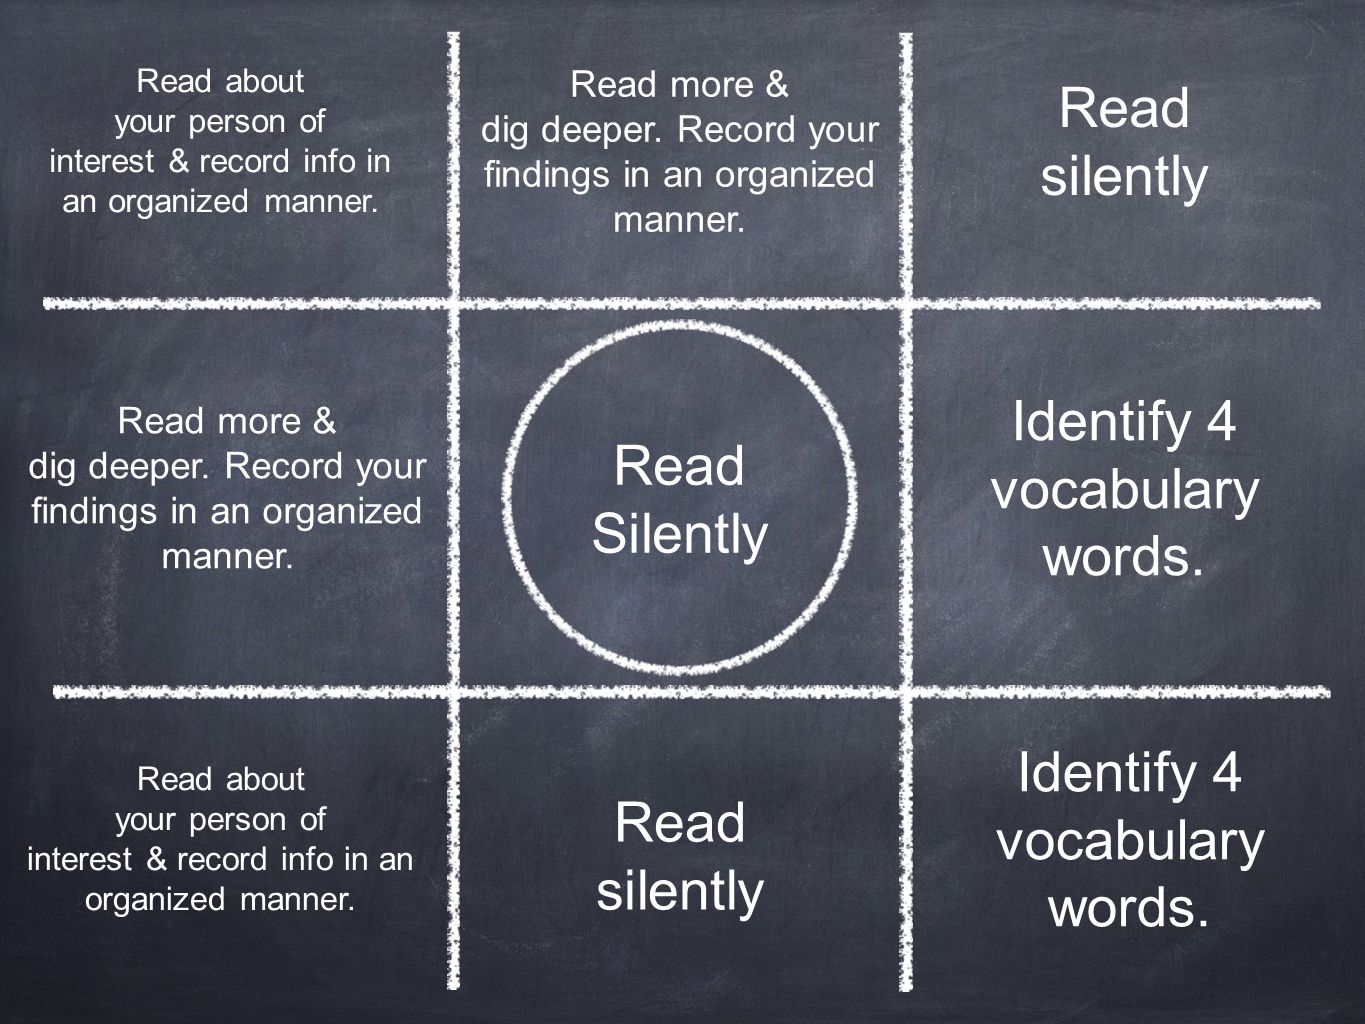 Identify 4 vocabulary words. Read Silently